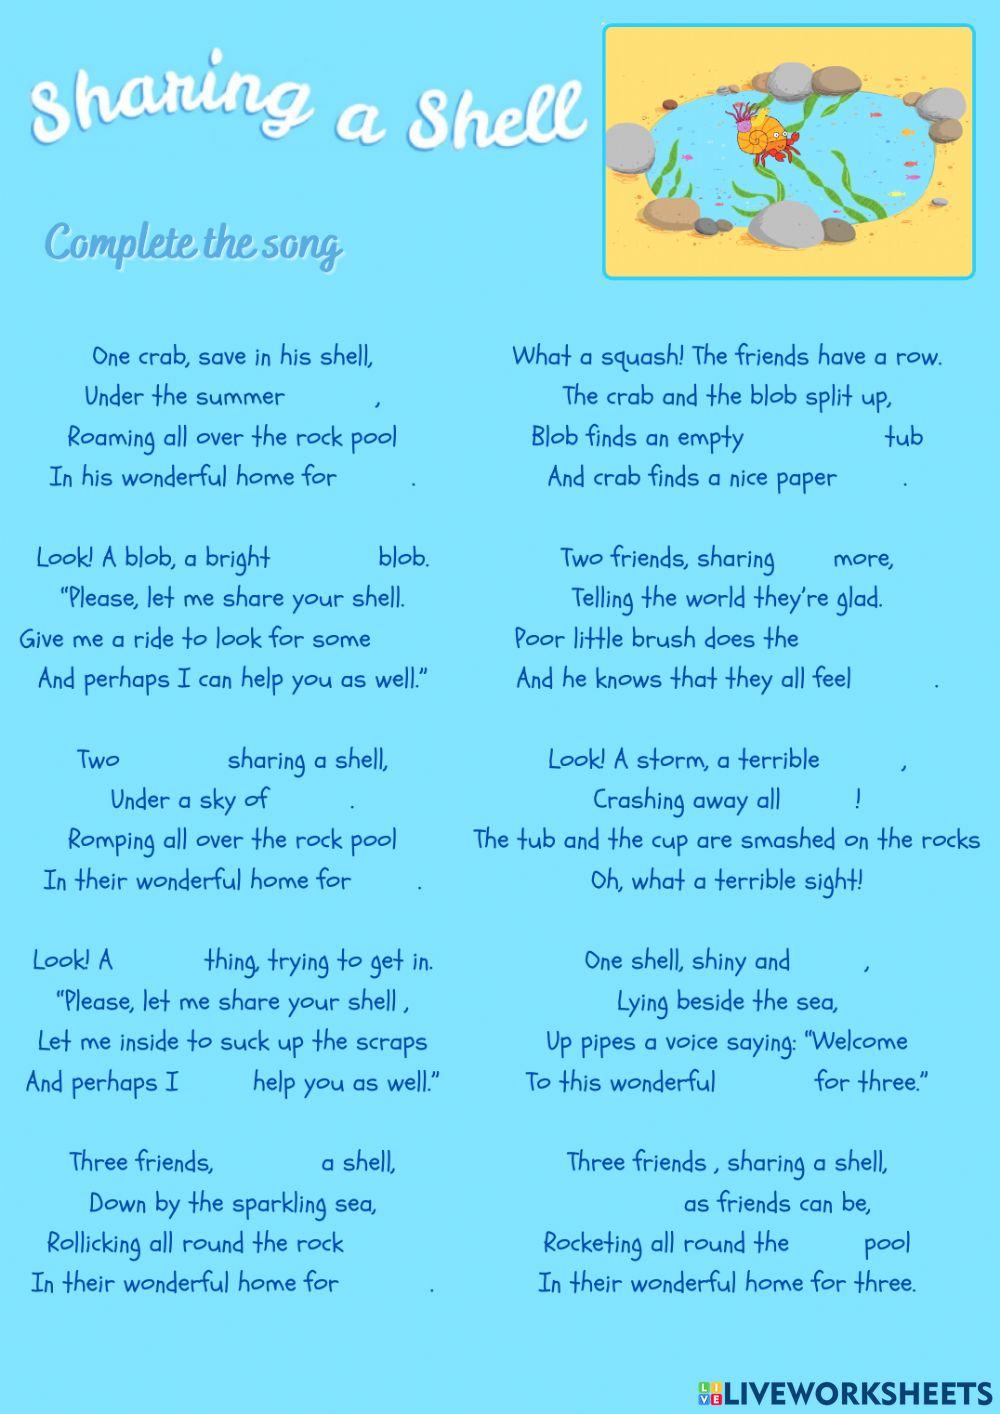 Sharing a shell song